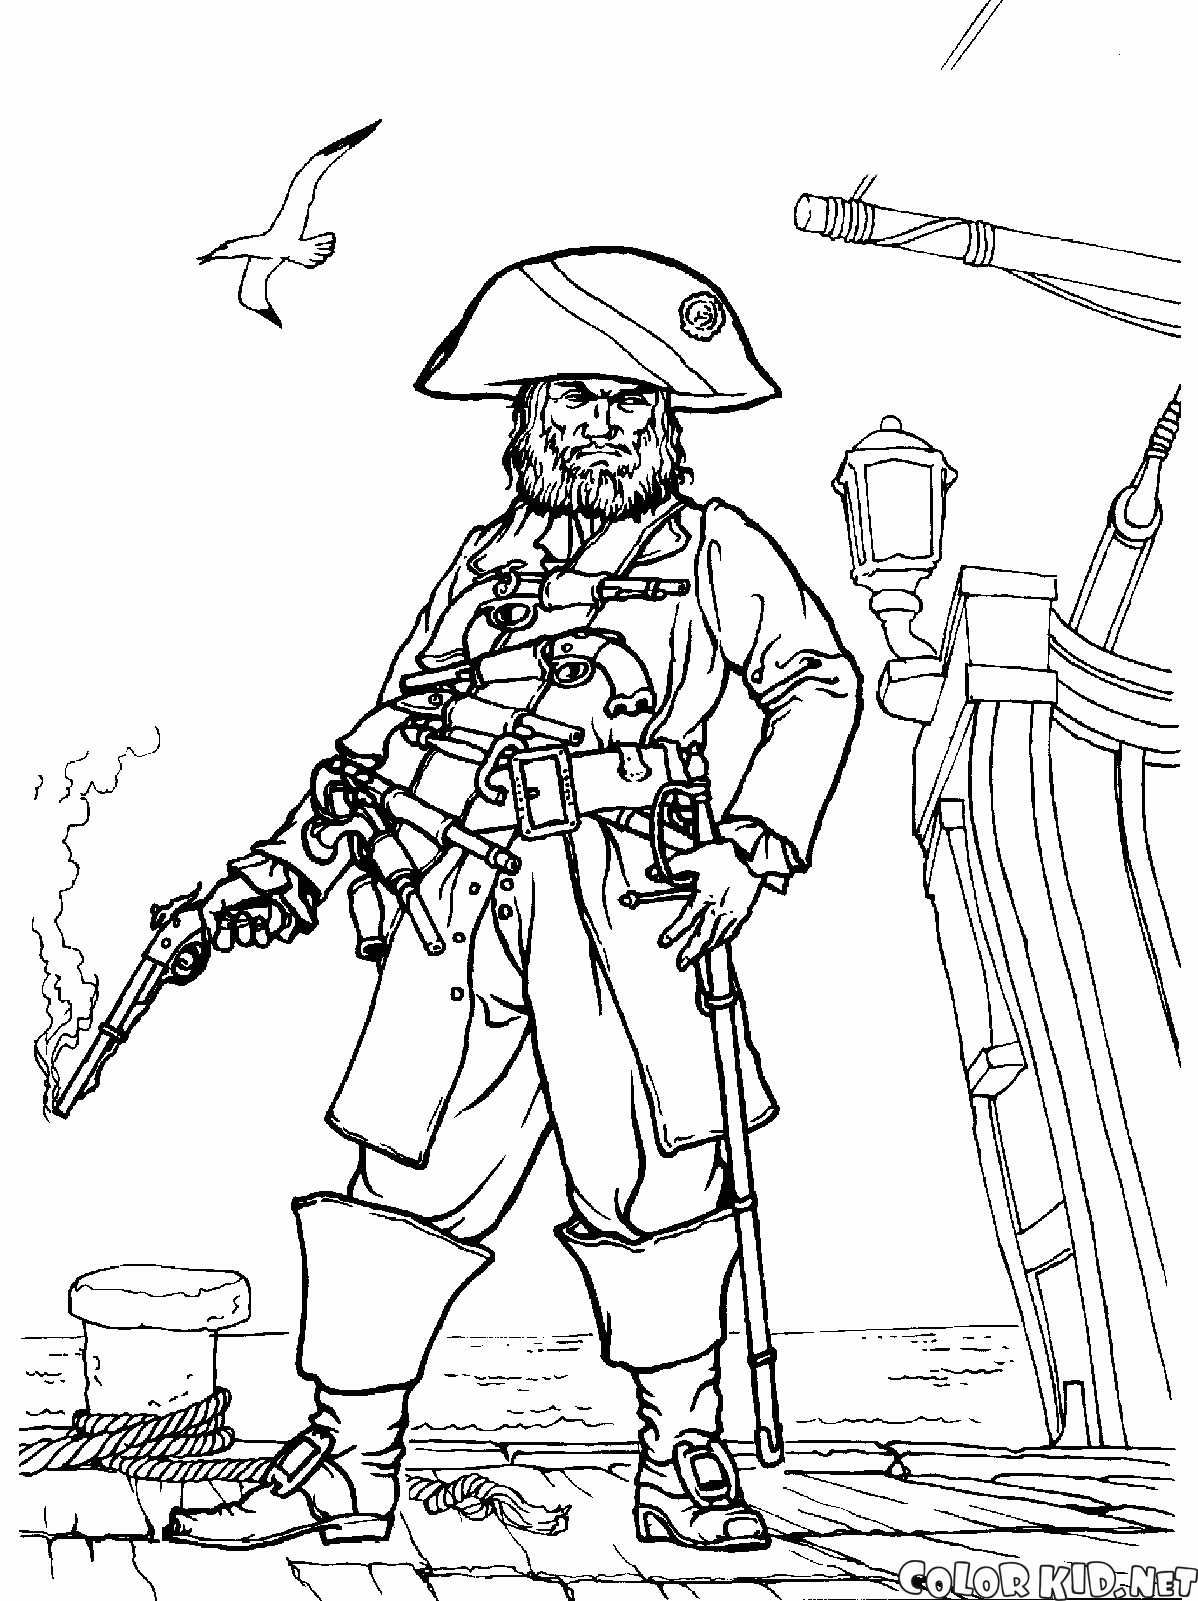 Pirate gunsmith